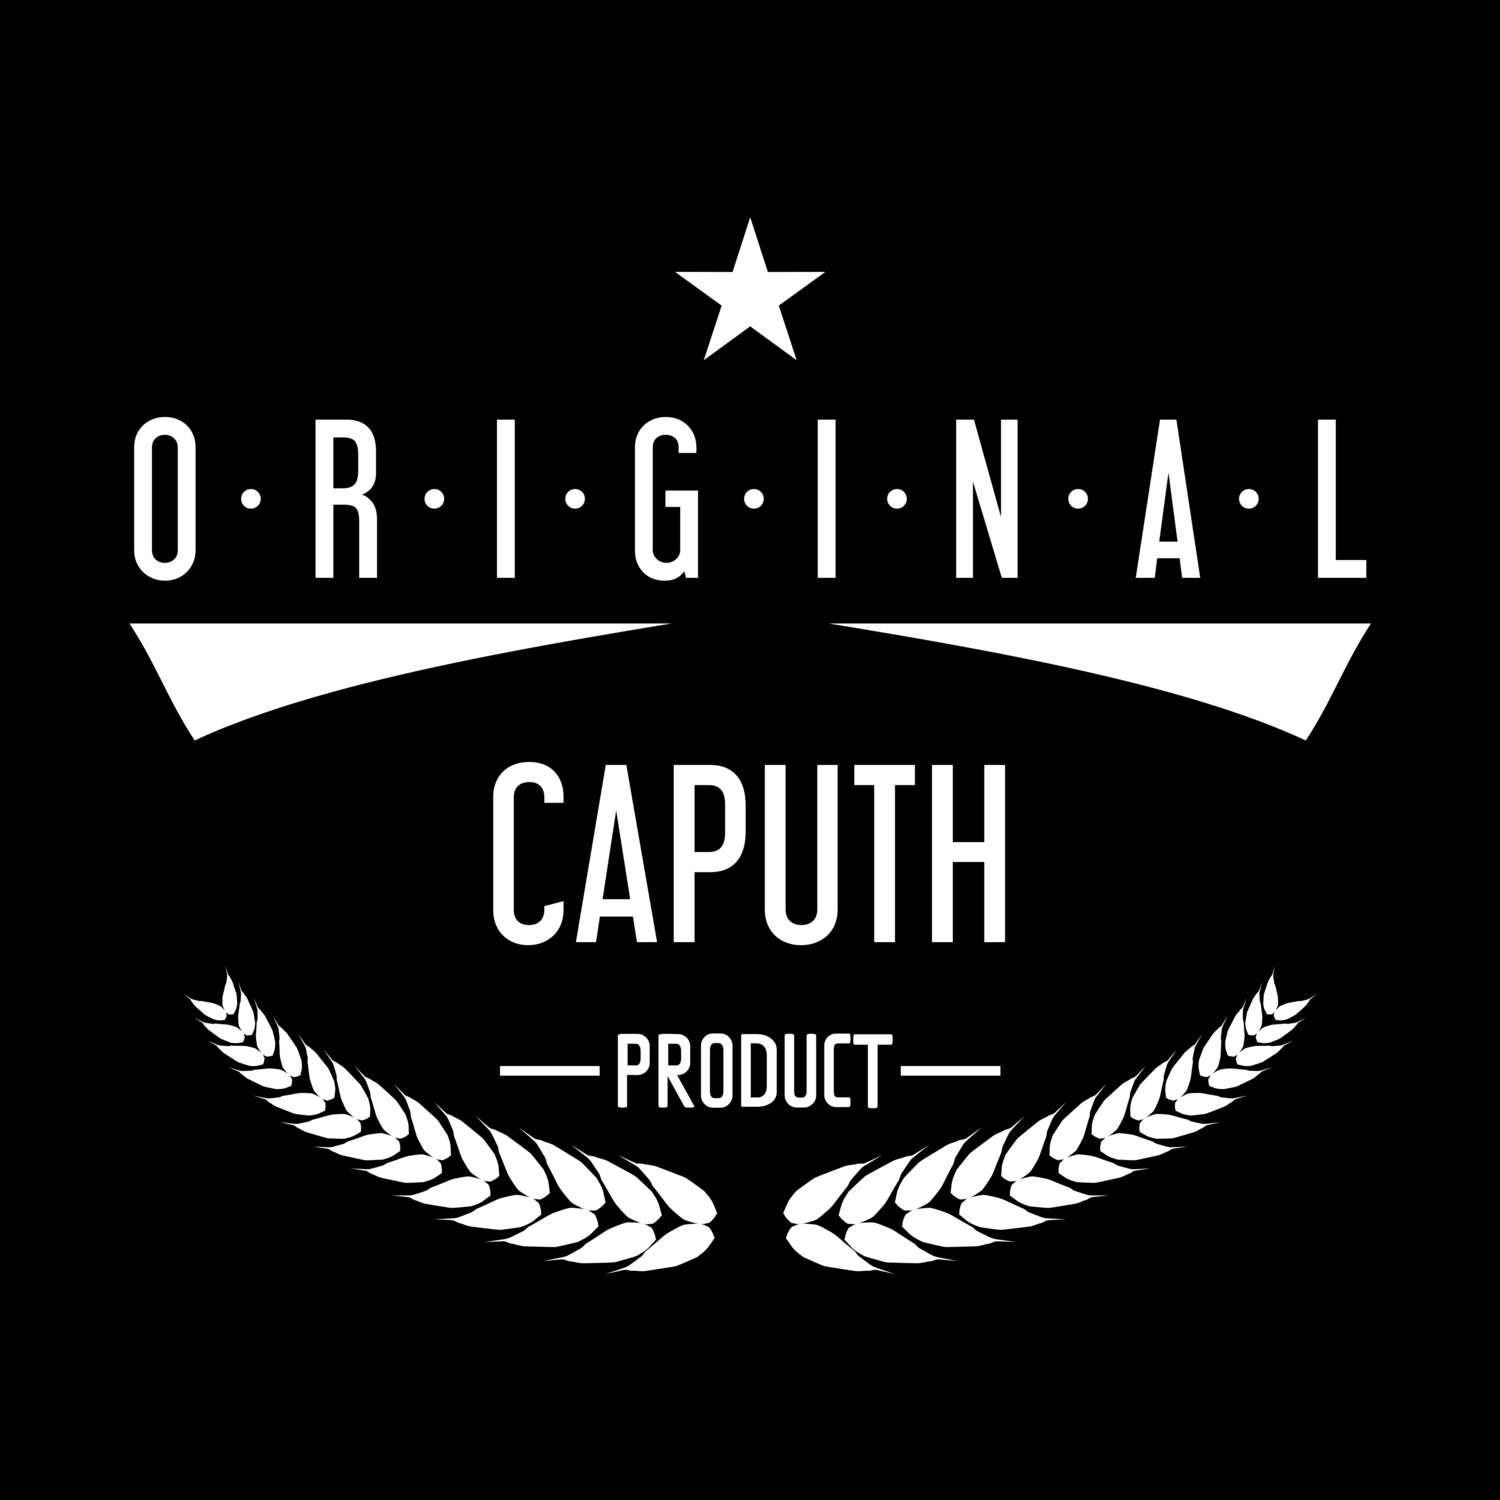 Caputh T-Shirt »Original Product«